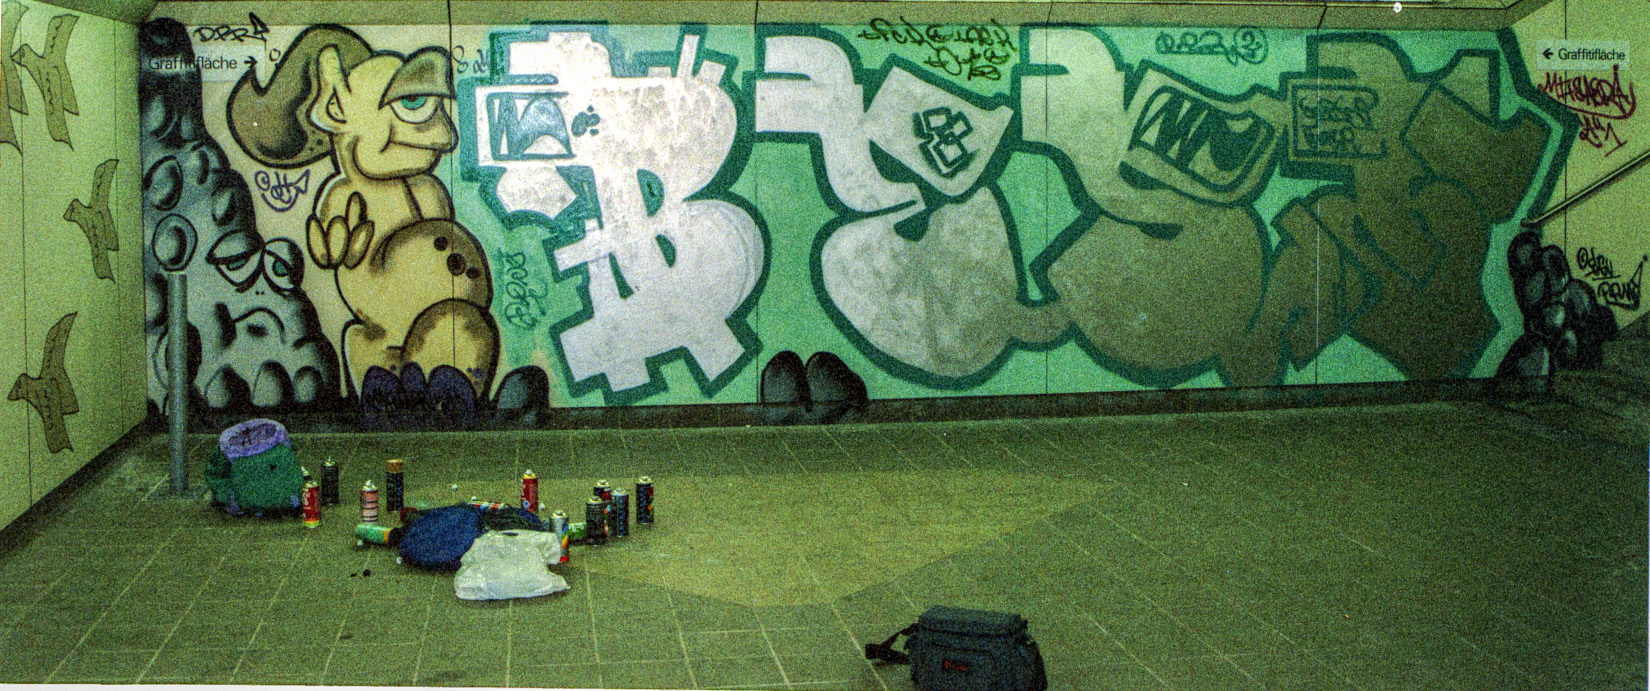 Frankfurt_Graffiti_1988_1989_H88_FRC (2 von 25)